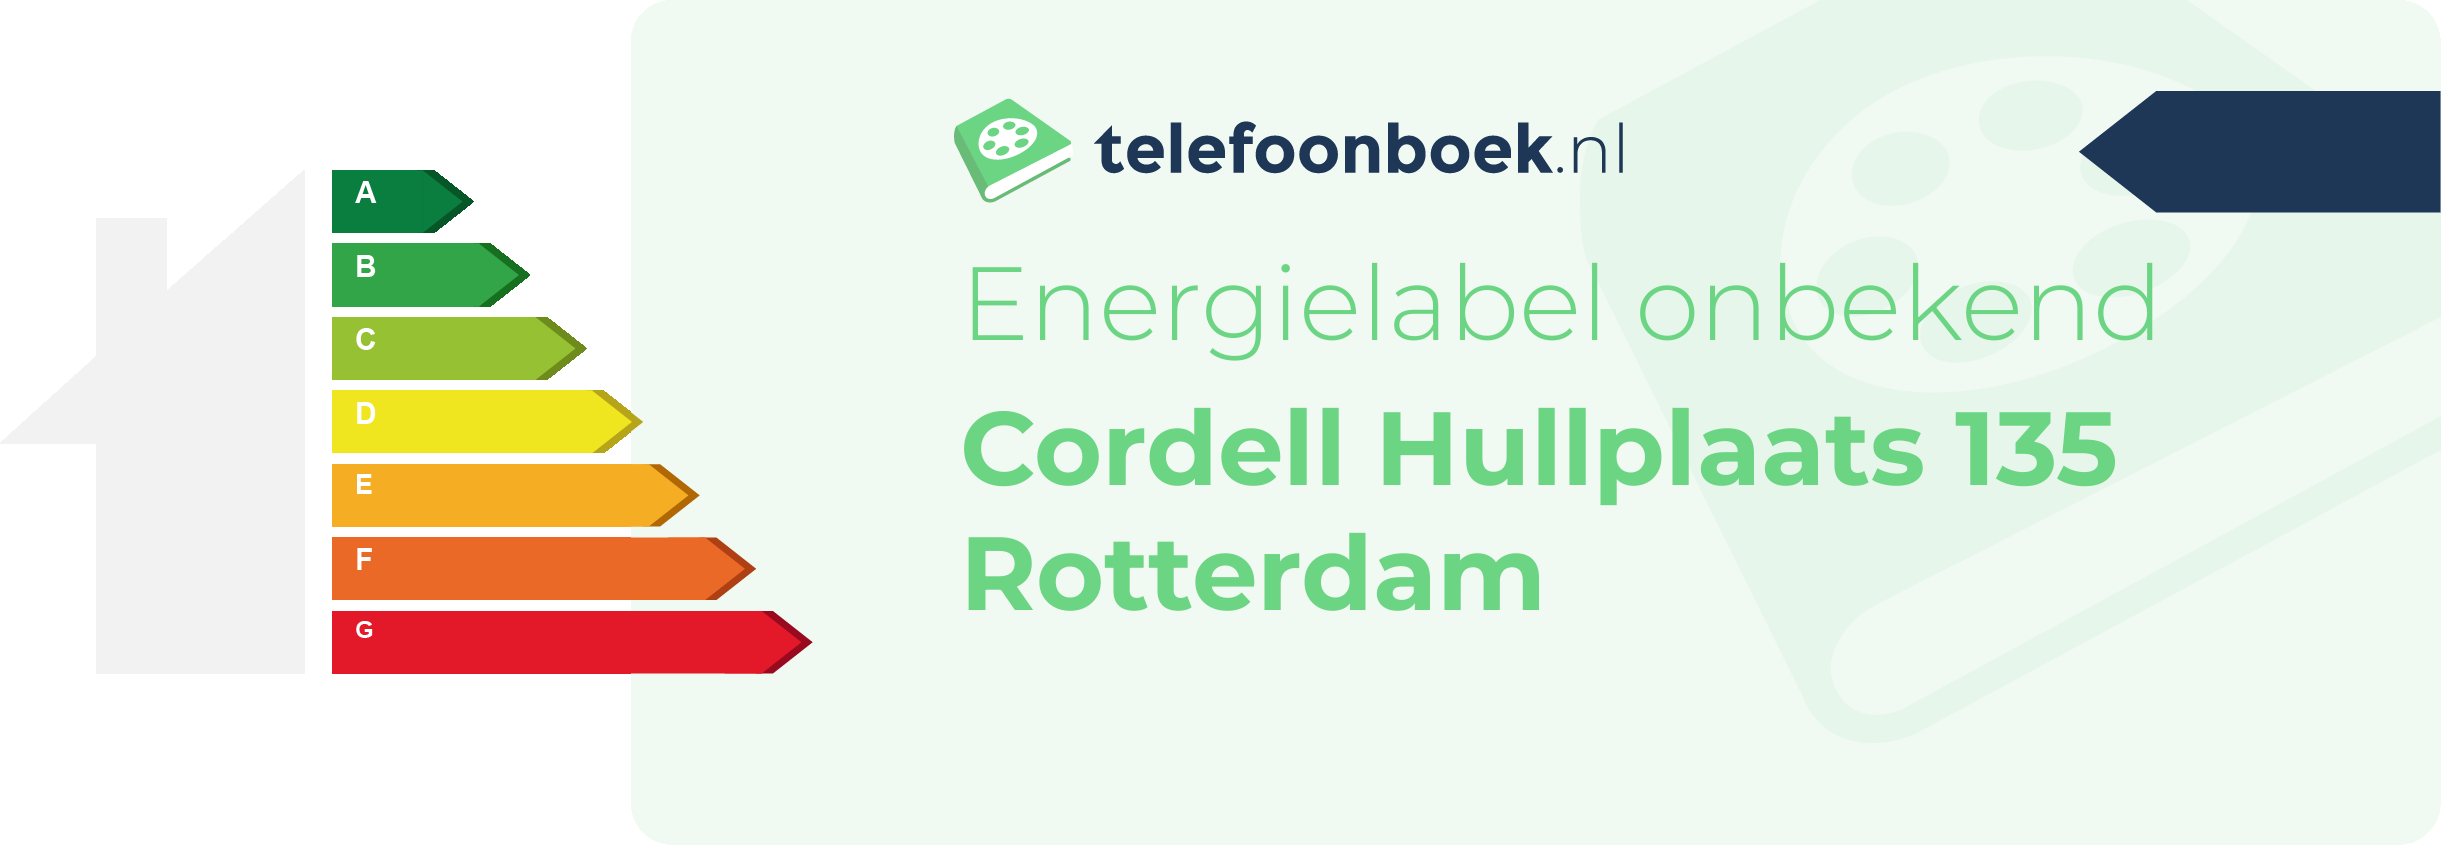 Energielabel Cordell Hullplaats 135 Rotterdam